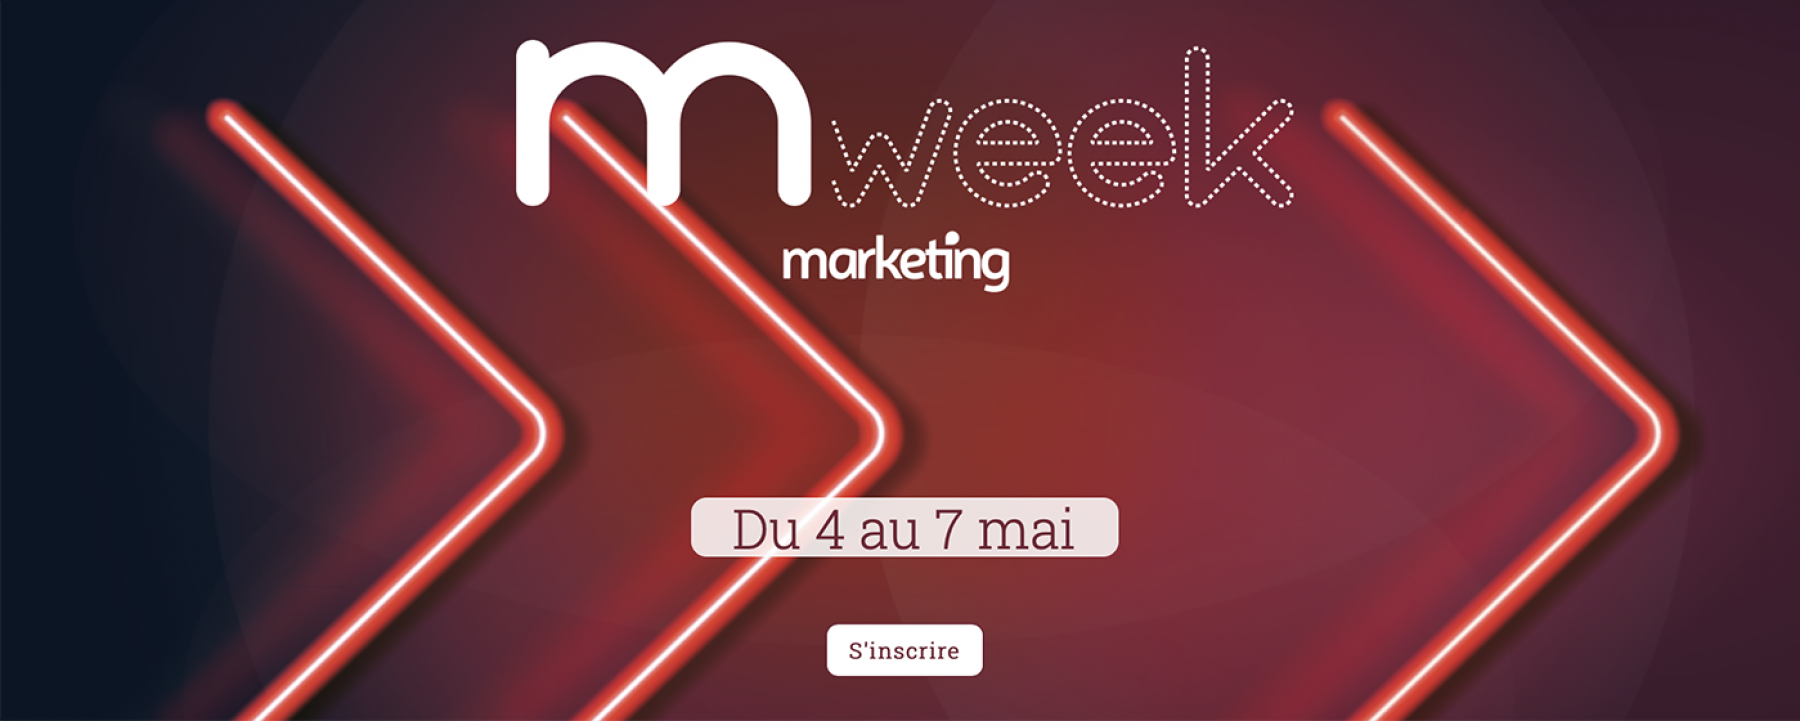 Marketing Week, organisé en ligne par Netmedia Group du 4 au 7 mai 2021